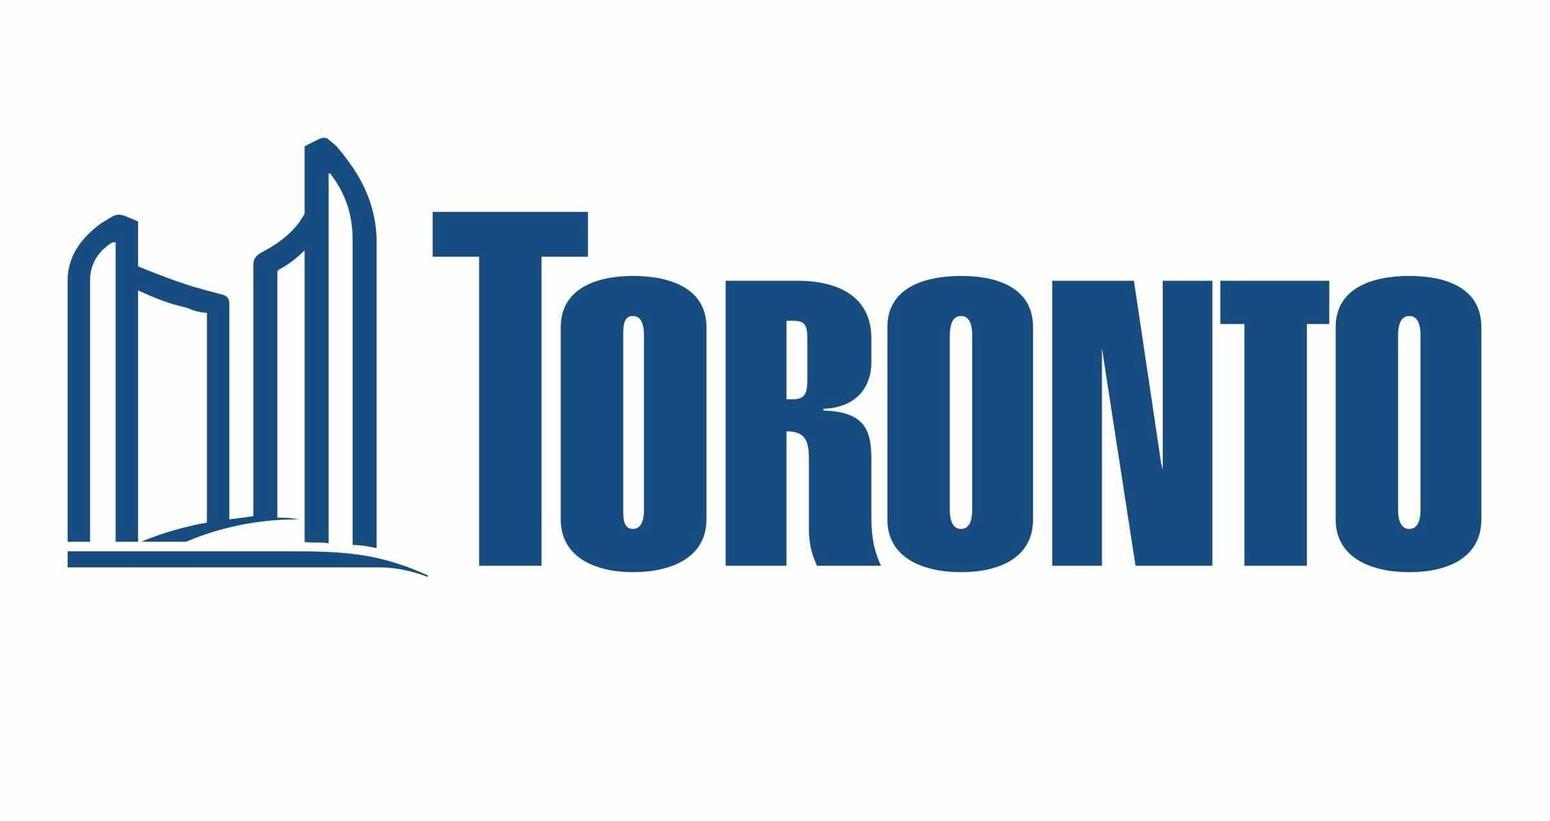 Toronto Green Standard logo